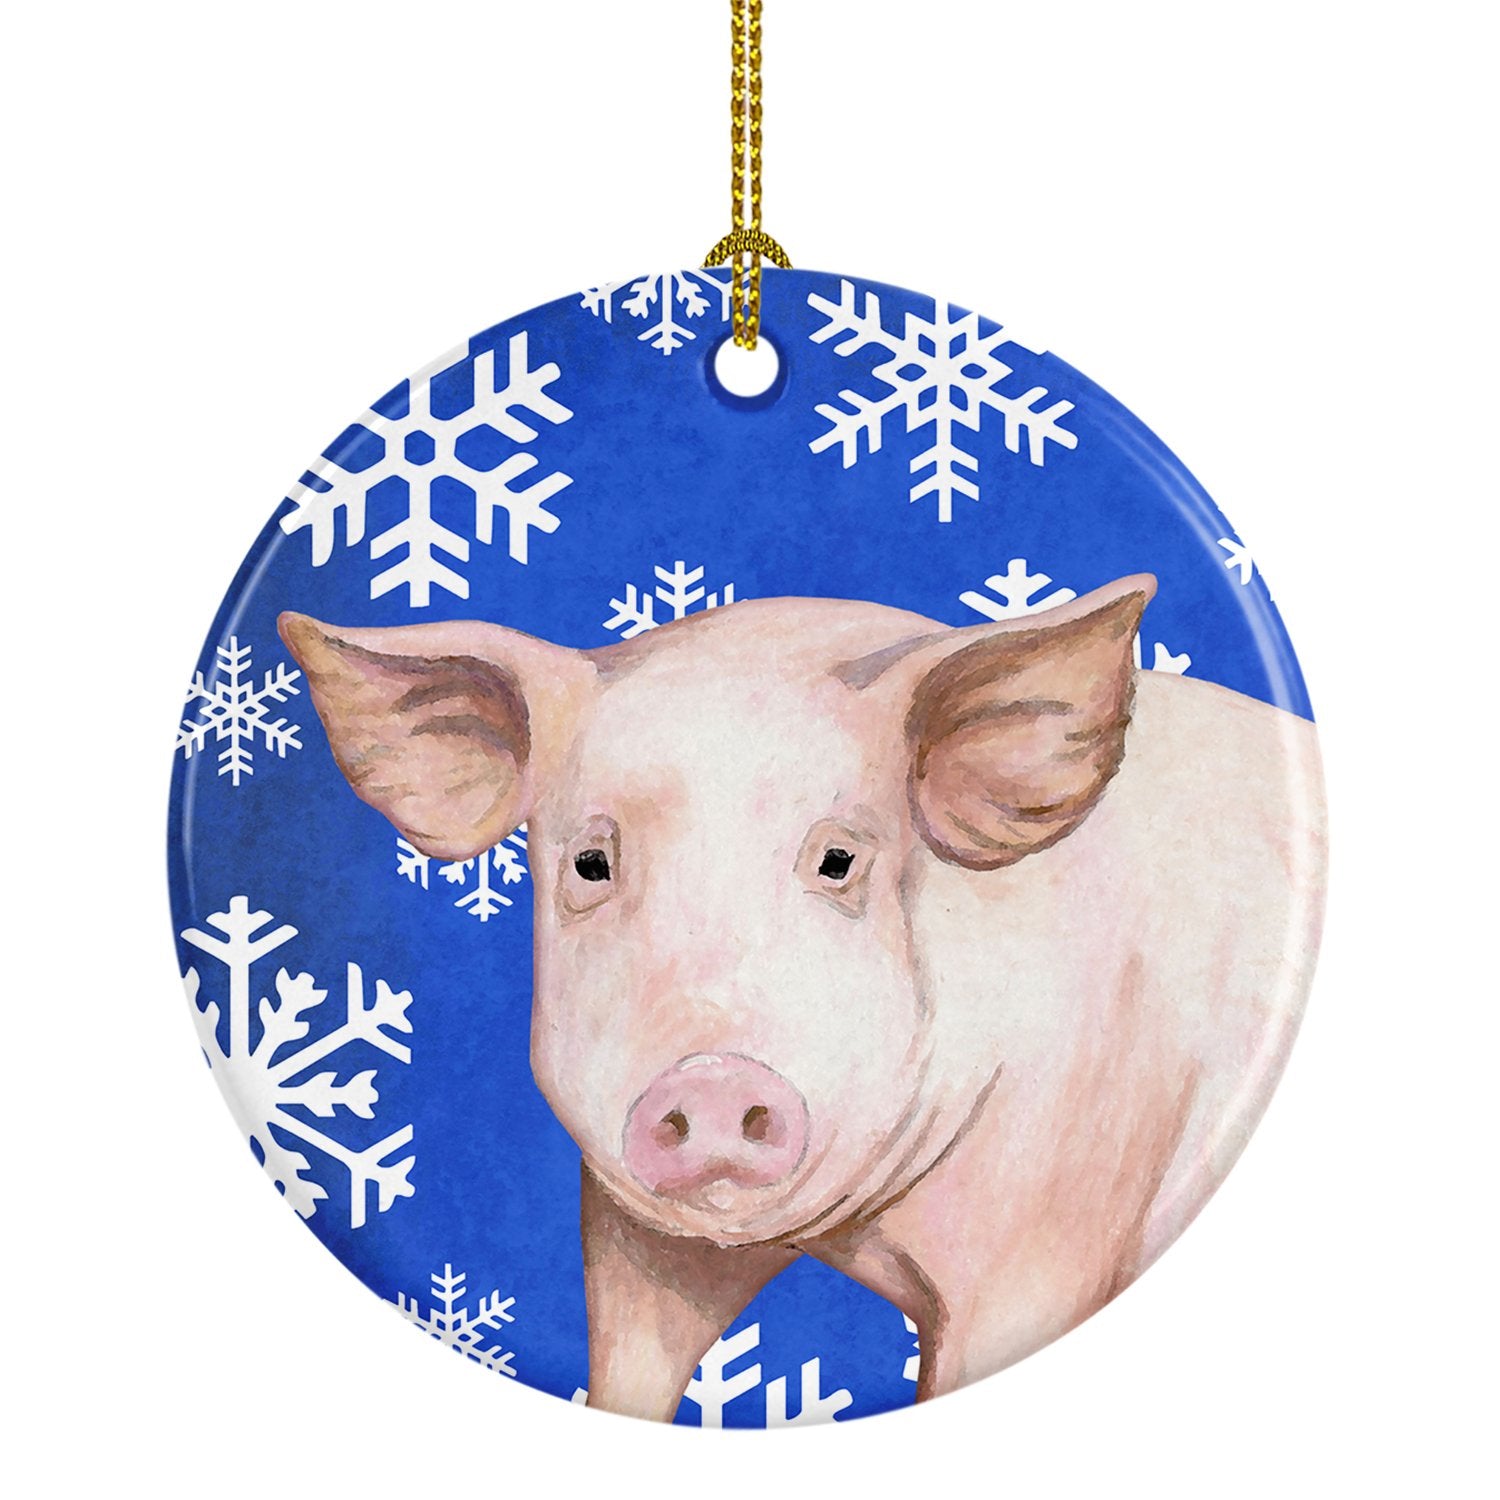 Pig Winter Snowflakes Holiday Ceramic Ornament SB3147CO1 by Caroline's Treasures